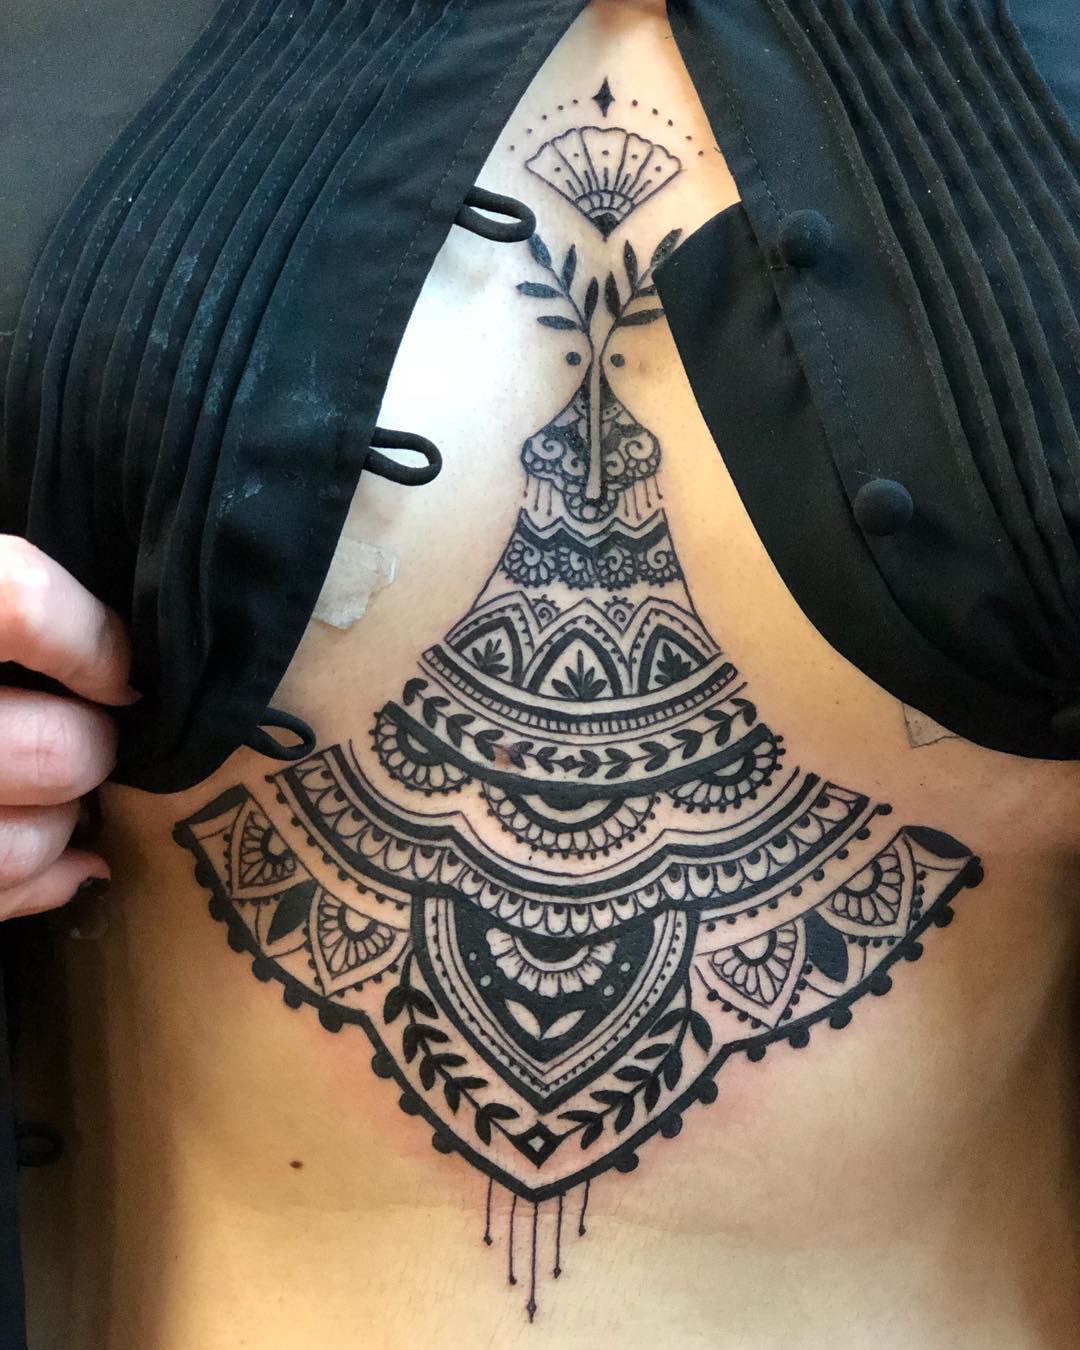 A mandala chest tattoo